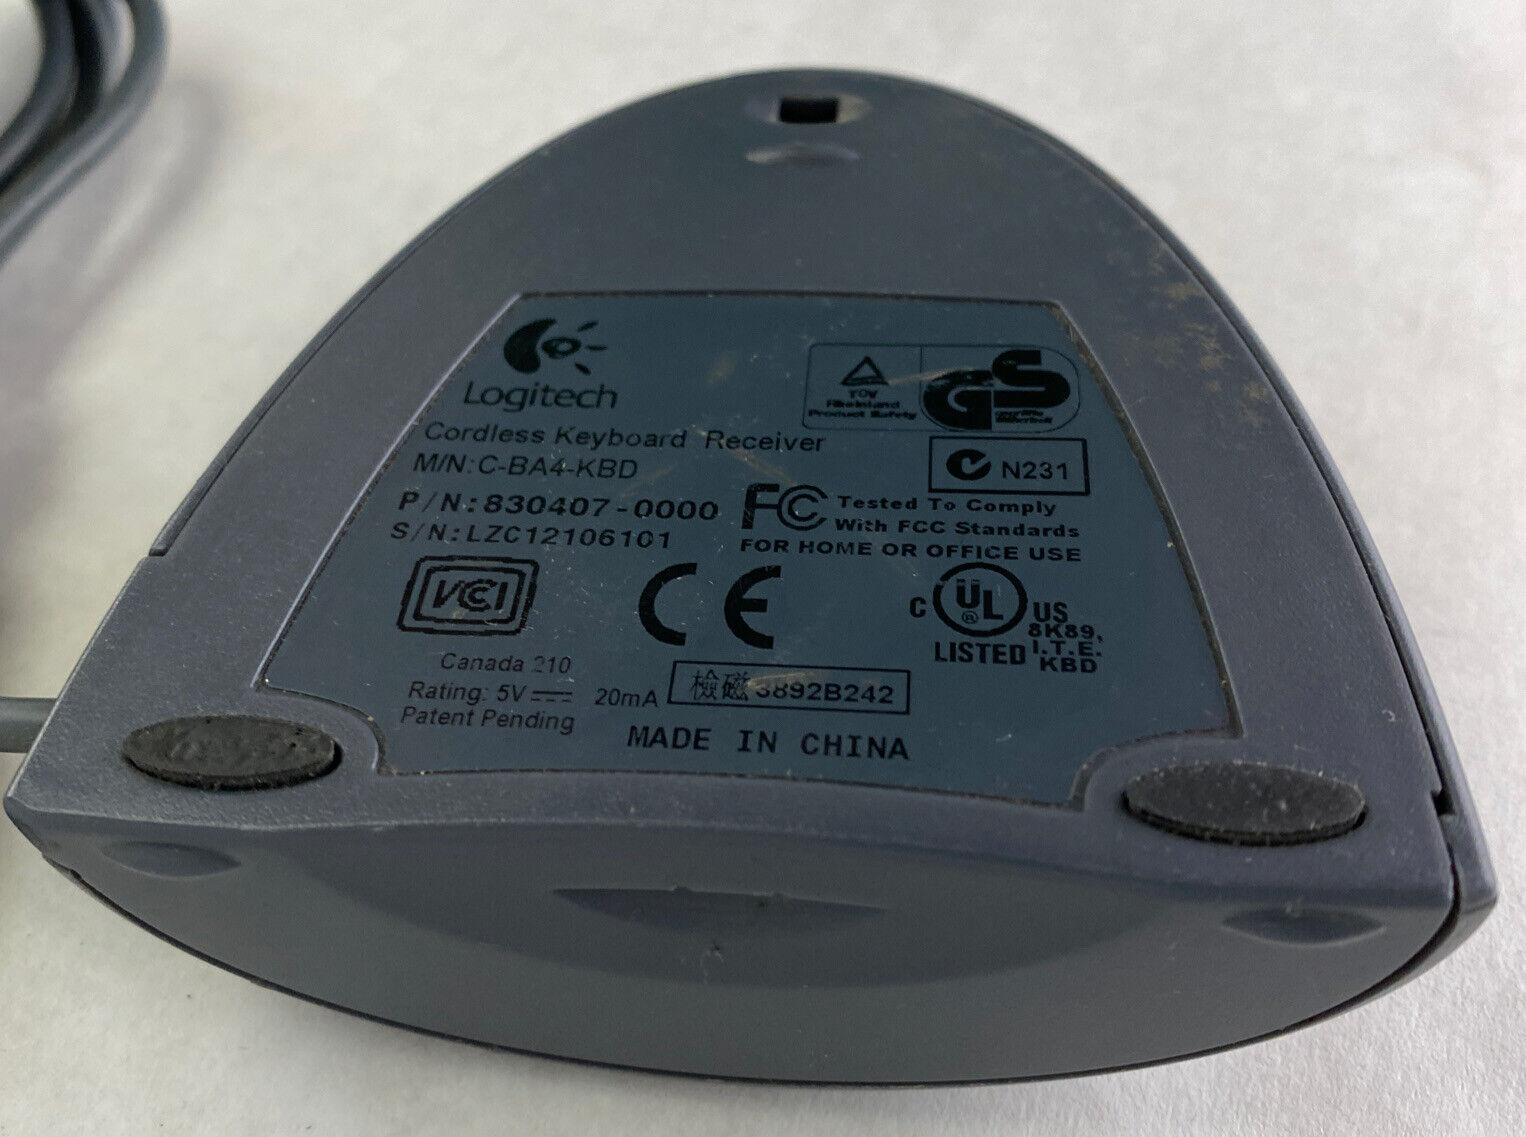 Logitech C-BA4-KBD 830407-0000 USB Cordless Mouse Receiver ONLY